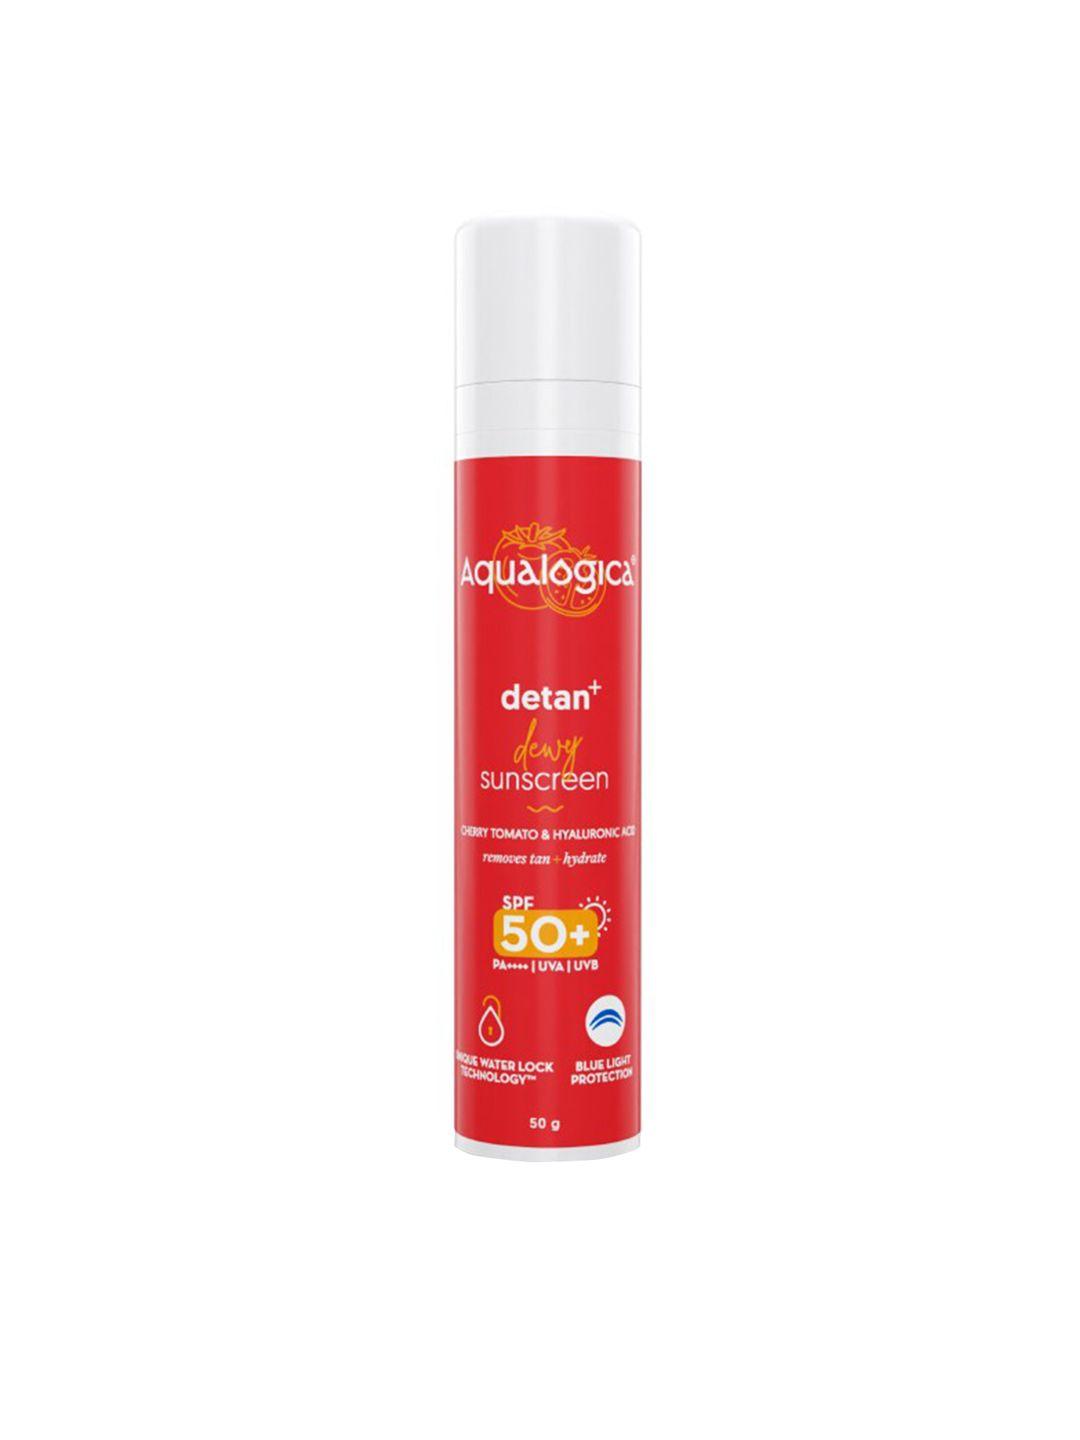 Aqualogica Detan+ Dewy SPF 50+ PA ++++ Sunscreen With Cherry Tomato & HA - 50 g